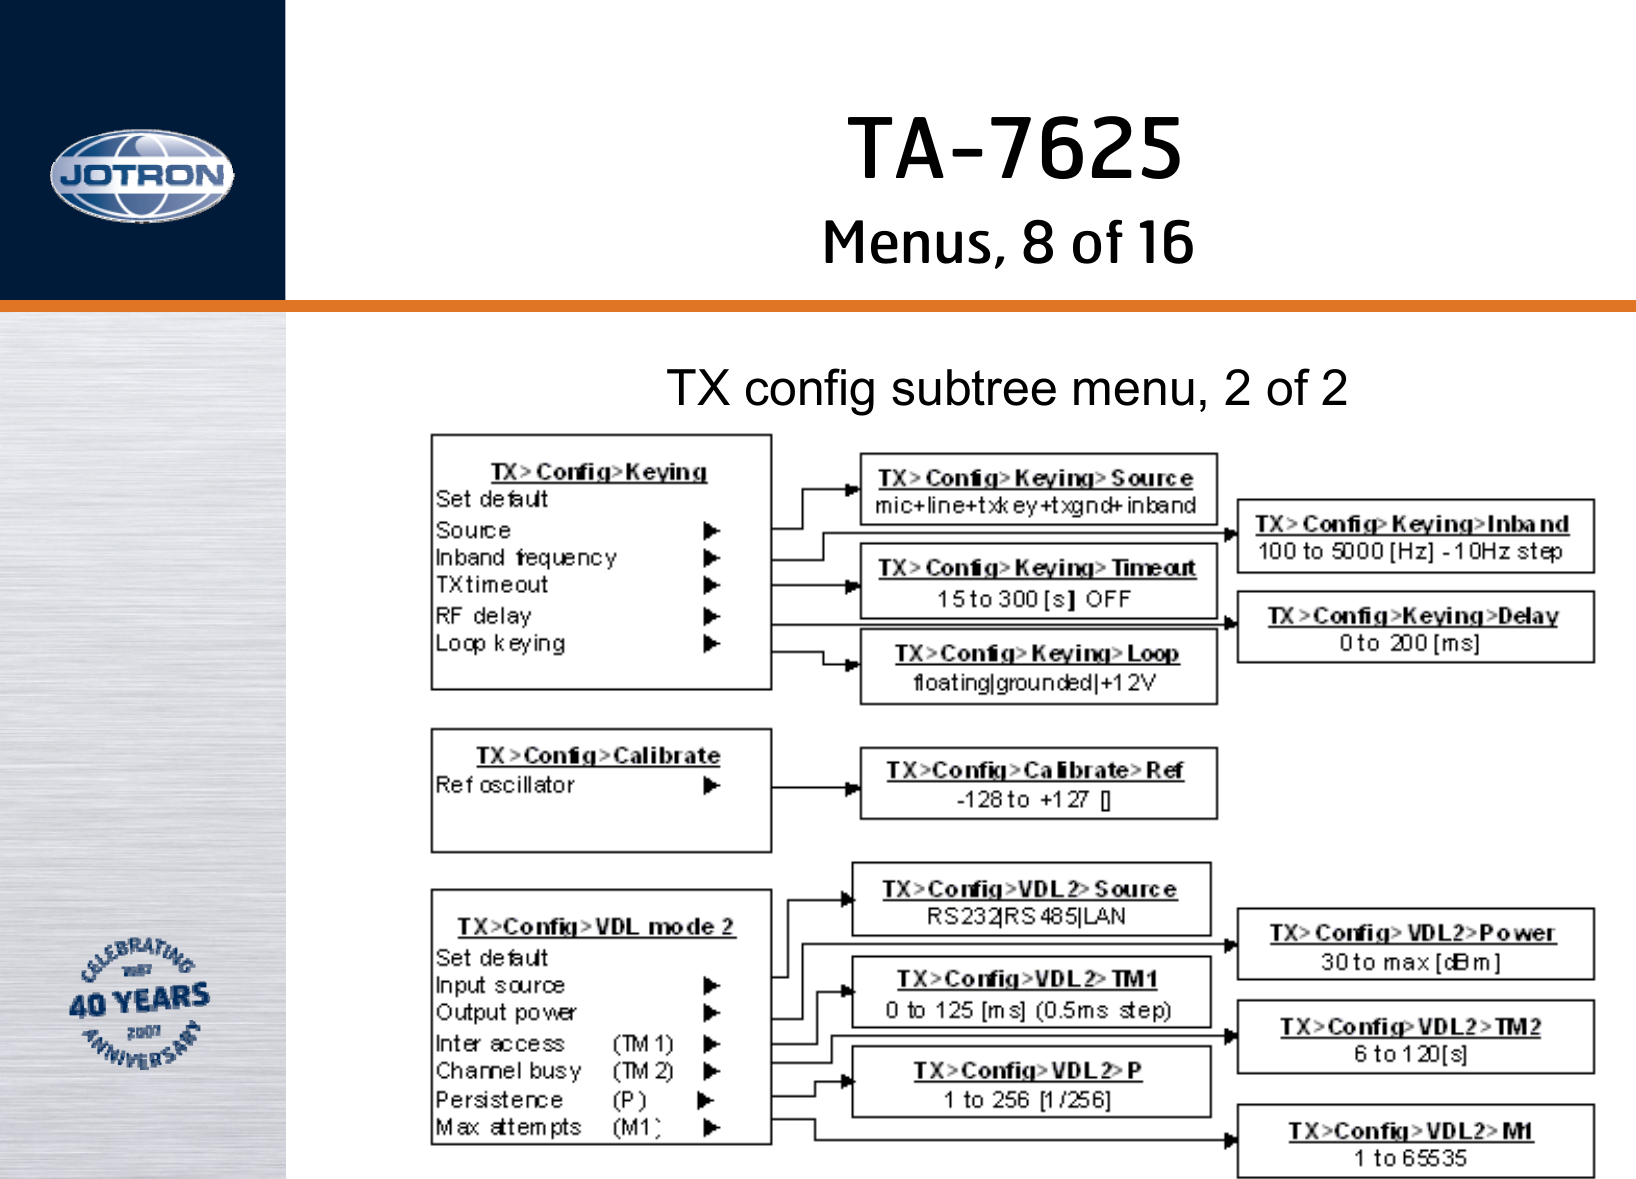 Menus, 8 of 16TX config subtree menu, 2 of 2TA-7625